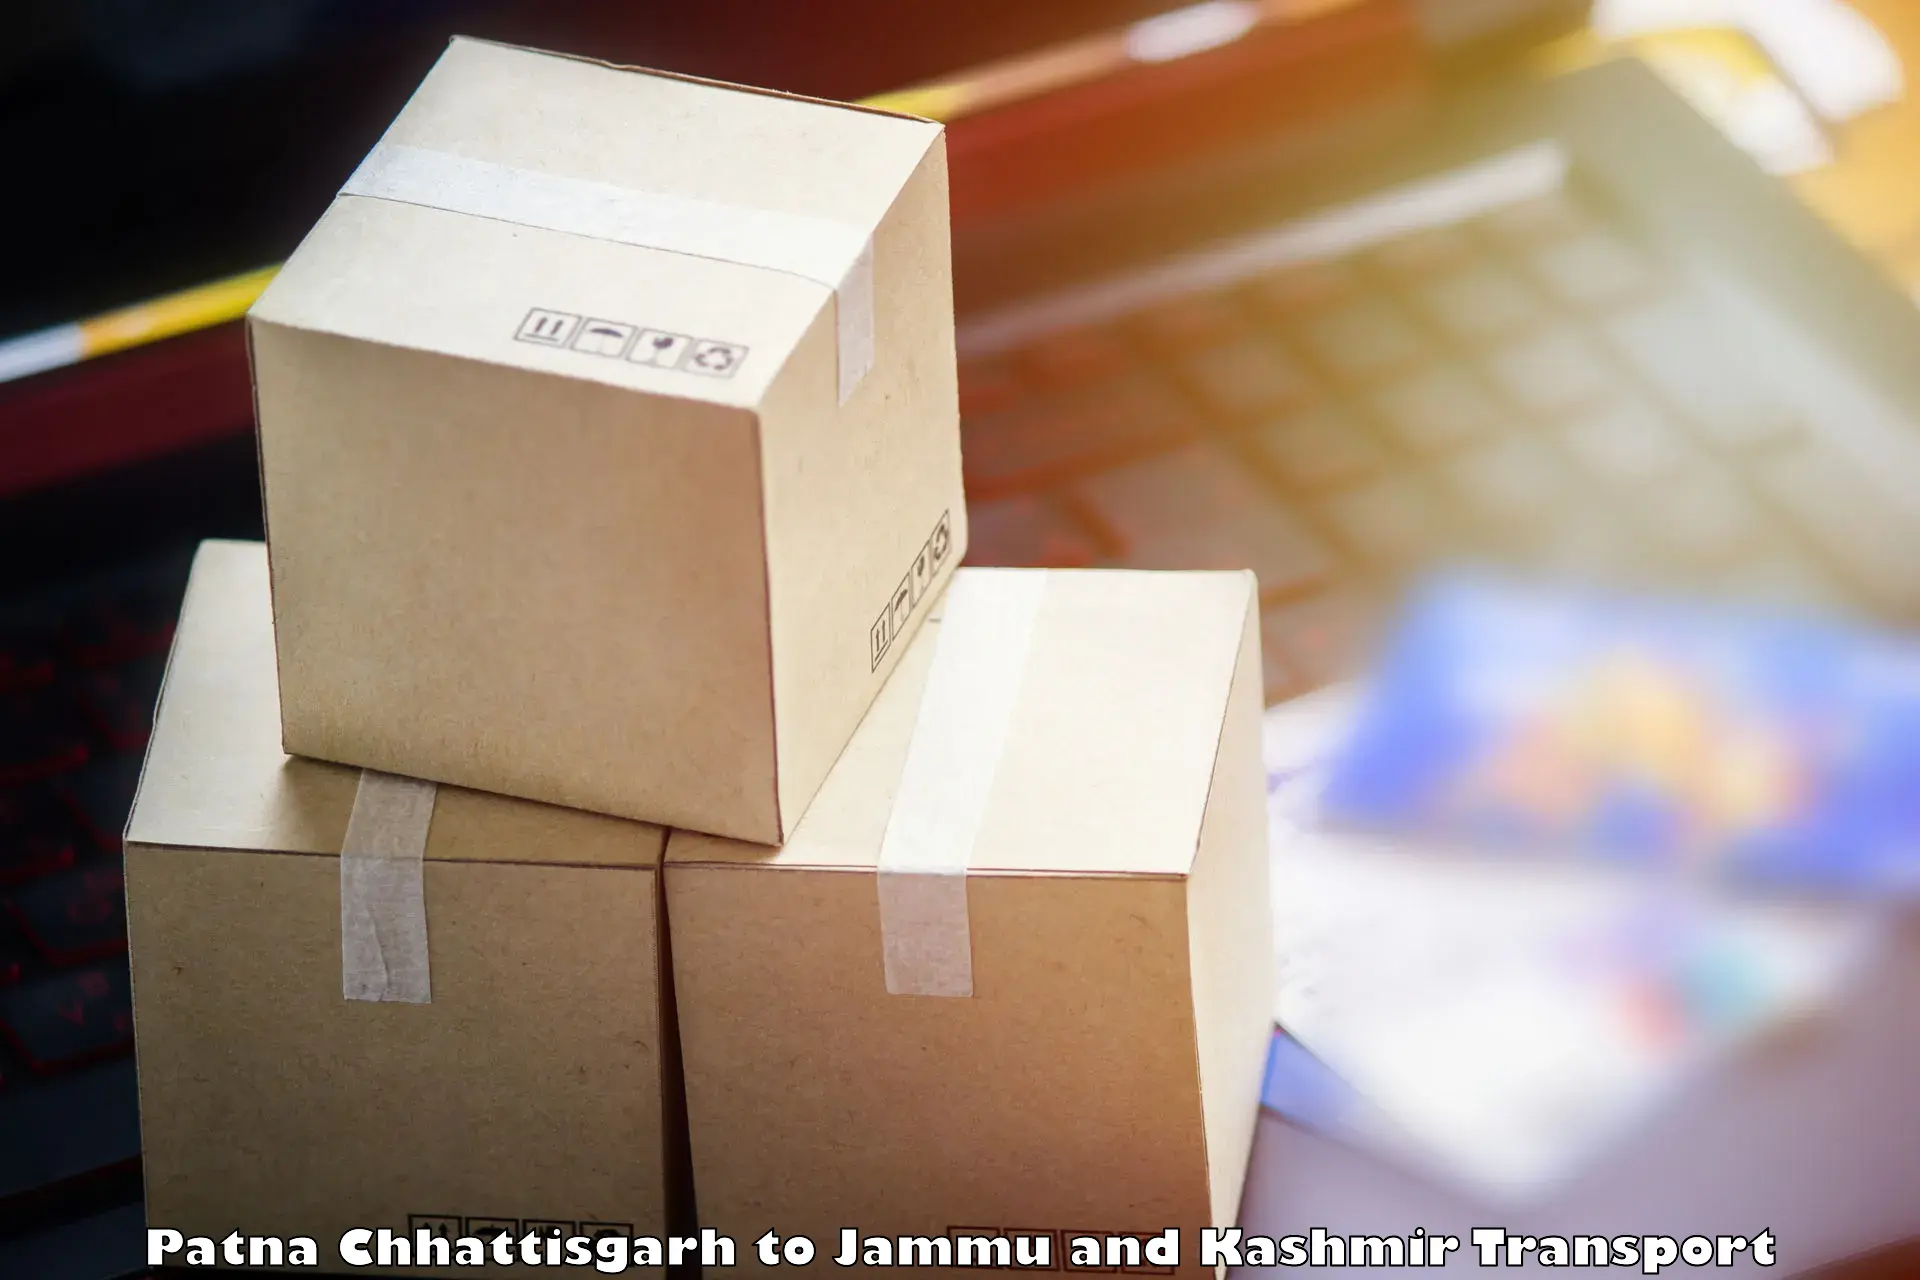 Daily parcel service transport Patna Chhattisgarh to Baramulla